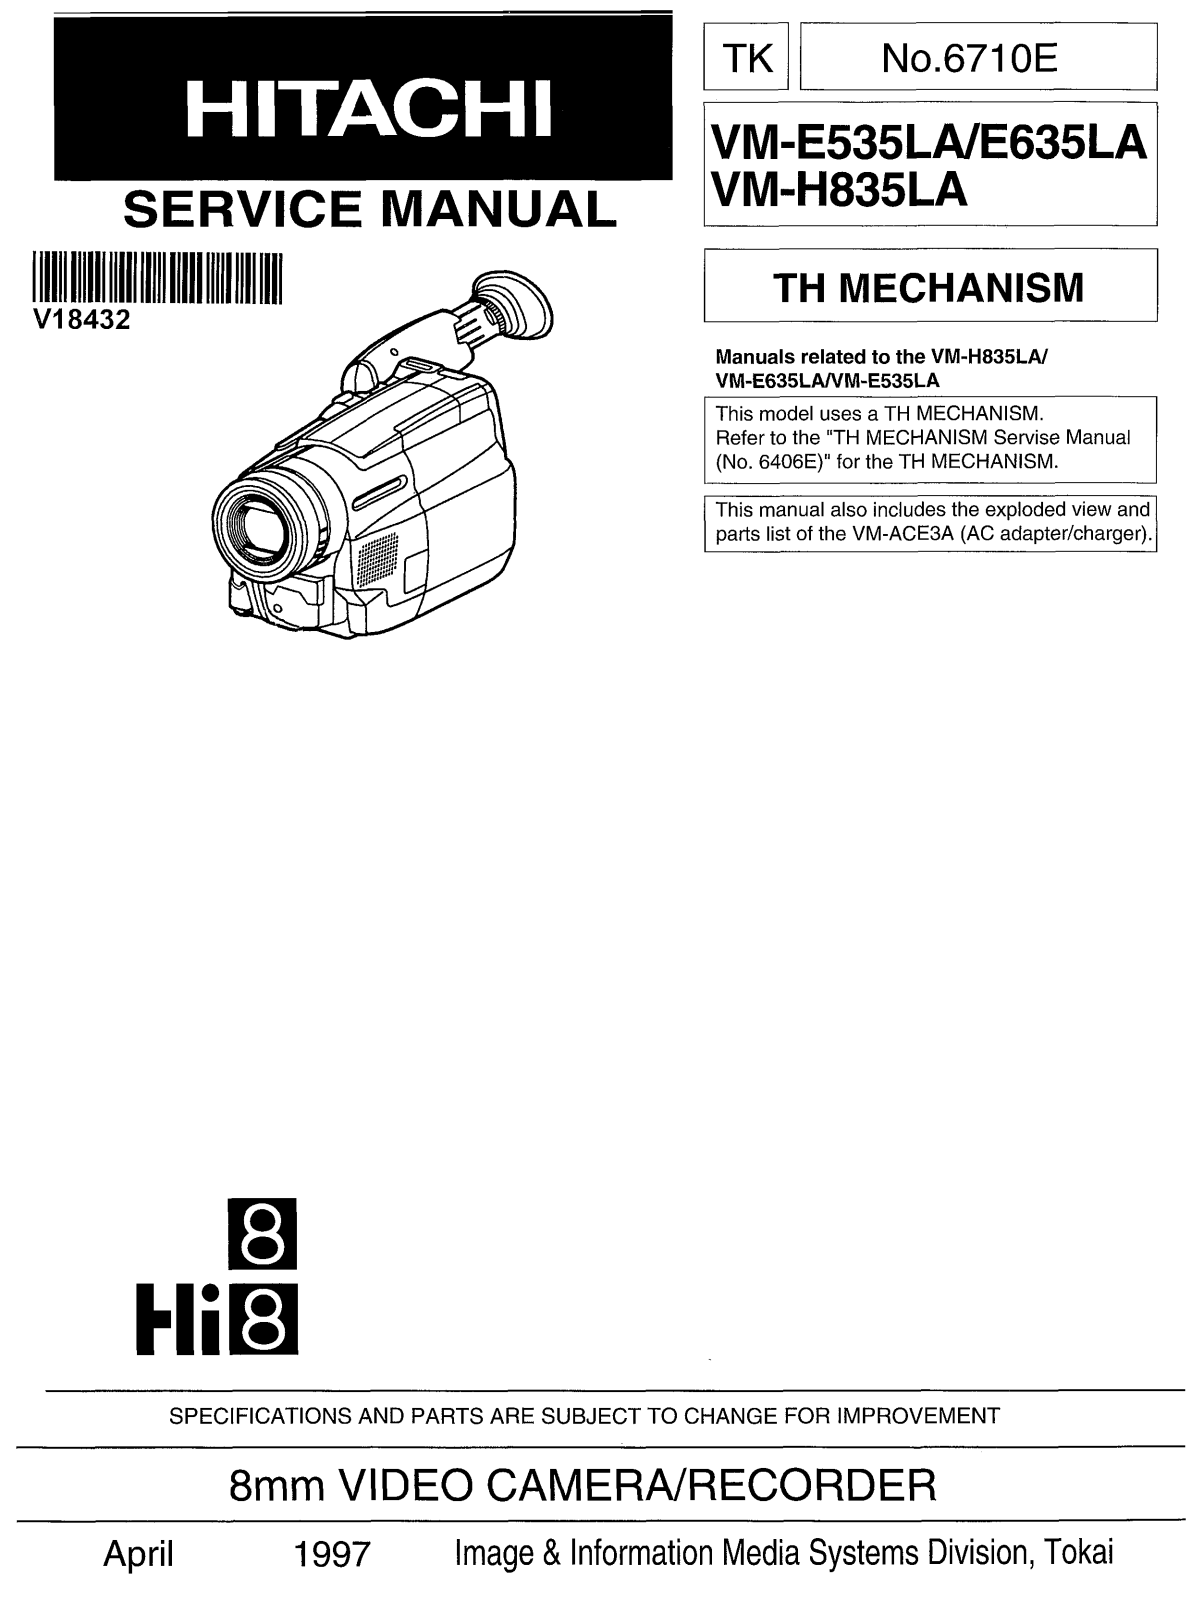 Hitachi VM-E335, VM-E635, VM-H835 Service Manual